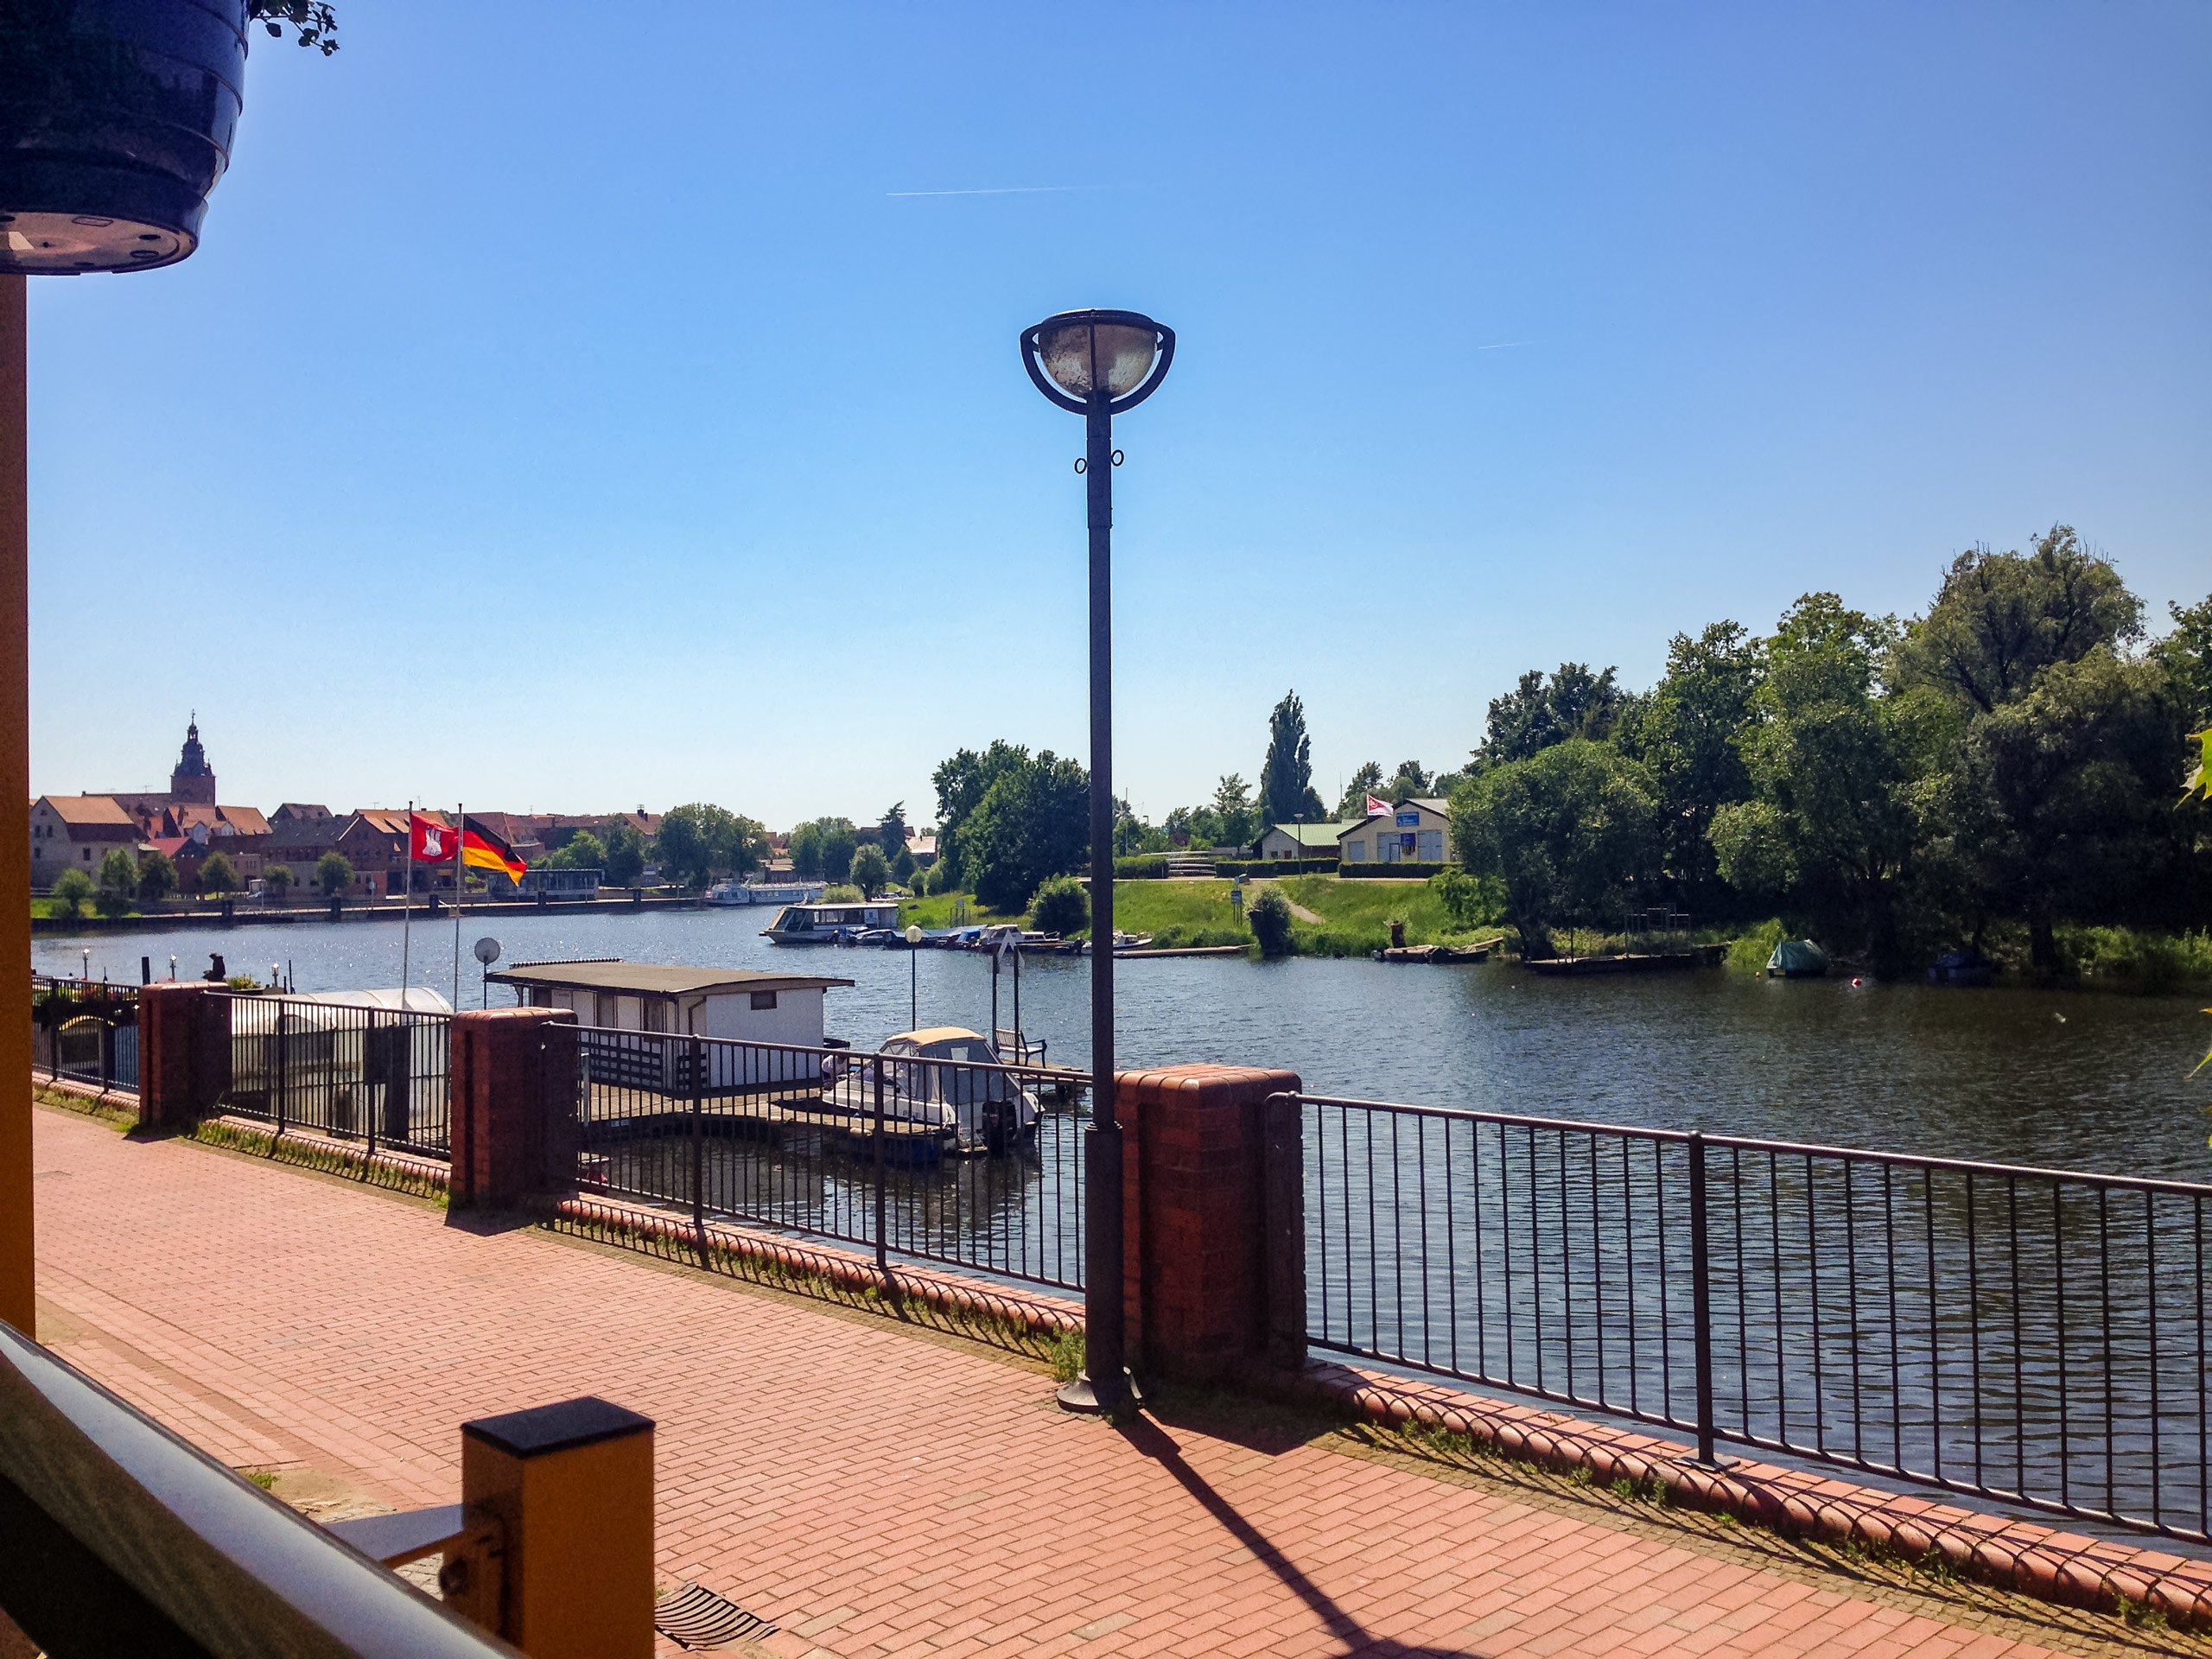 City of Havelberg brick walkway along Elbe river